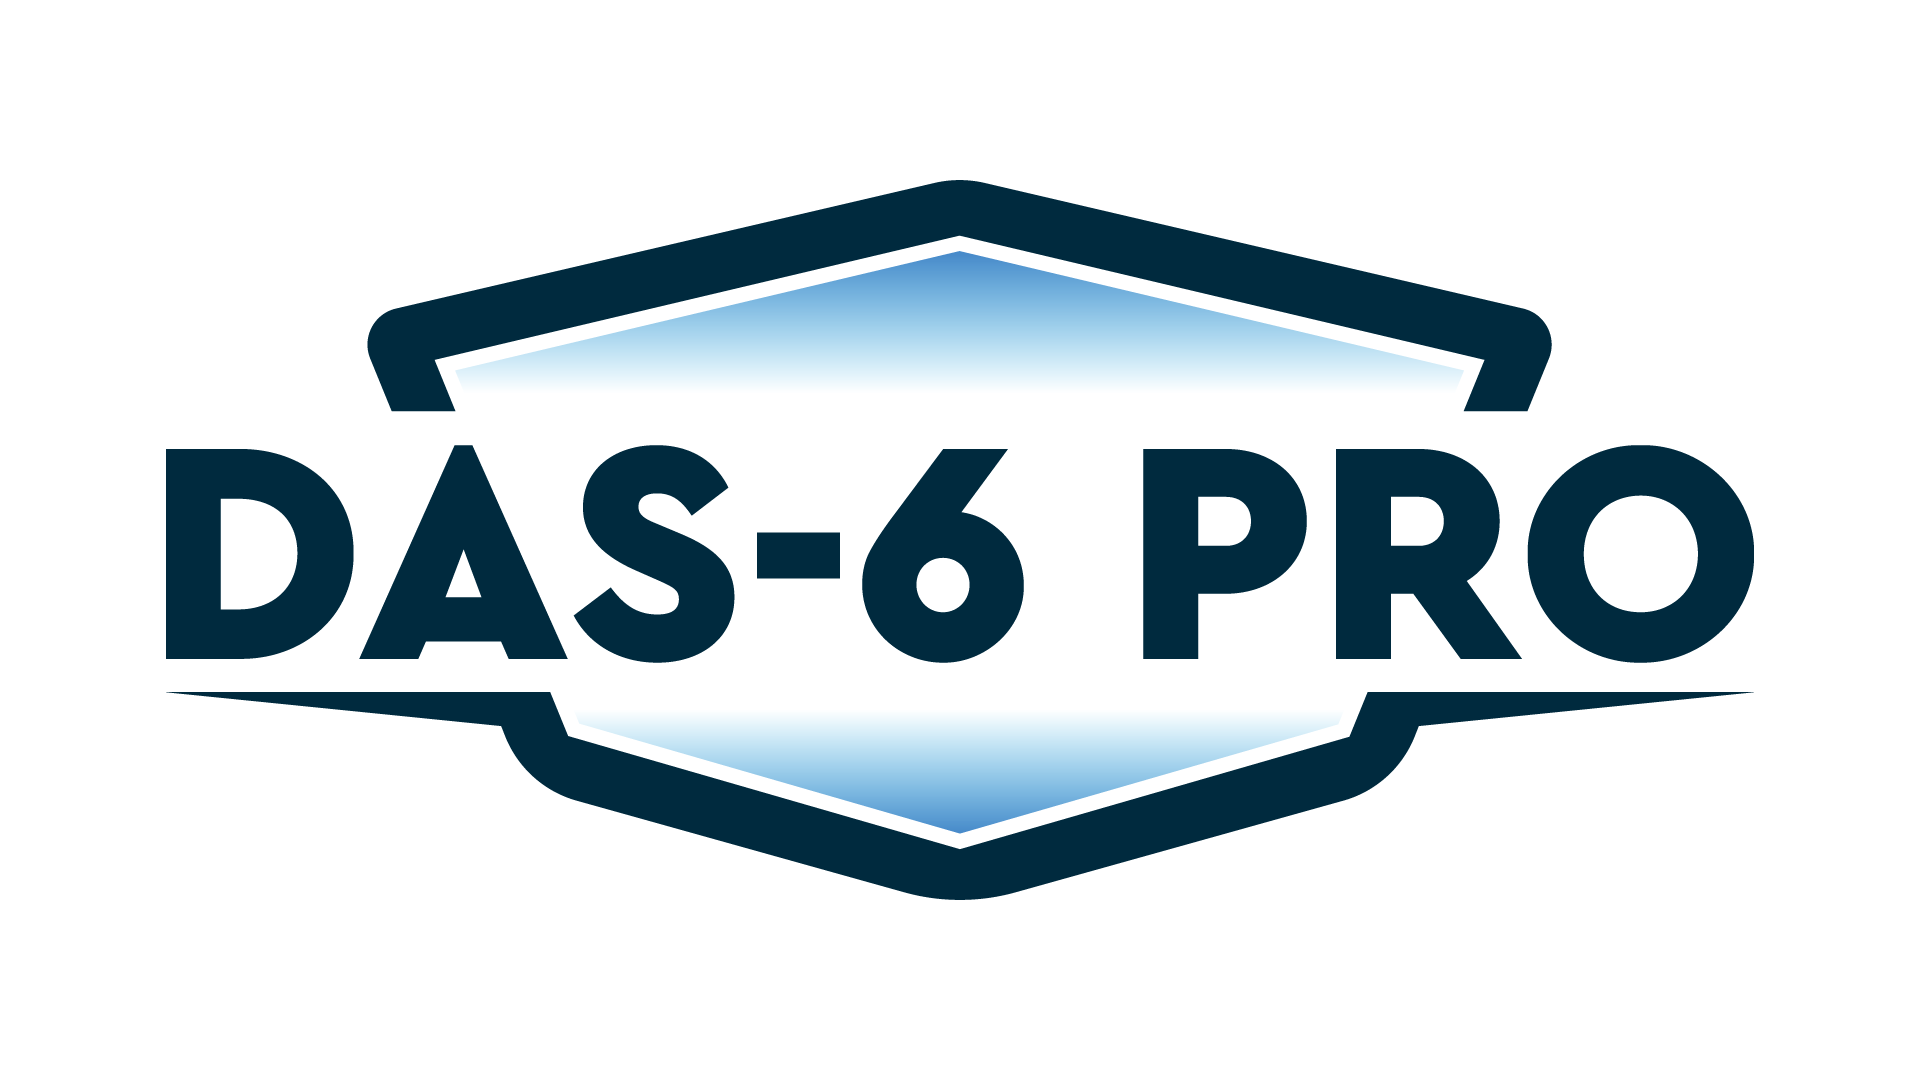 DAS-6 PRO